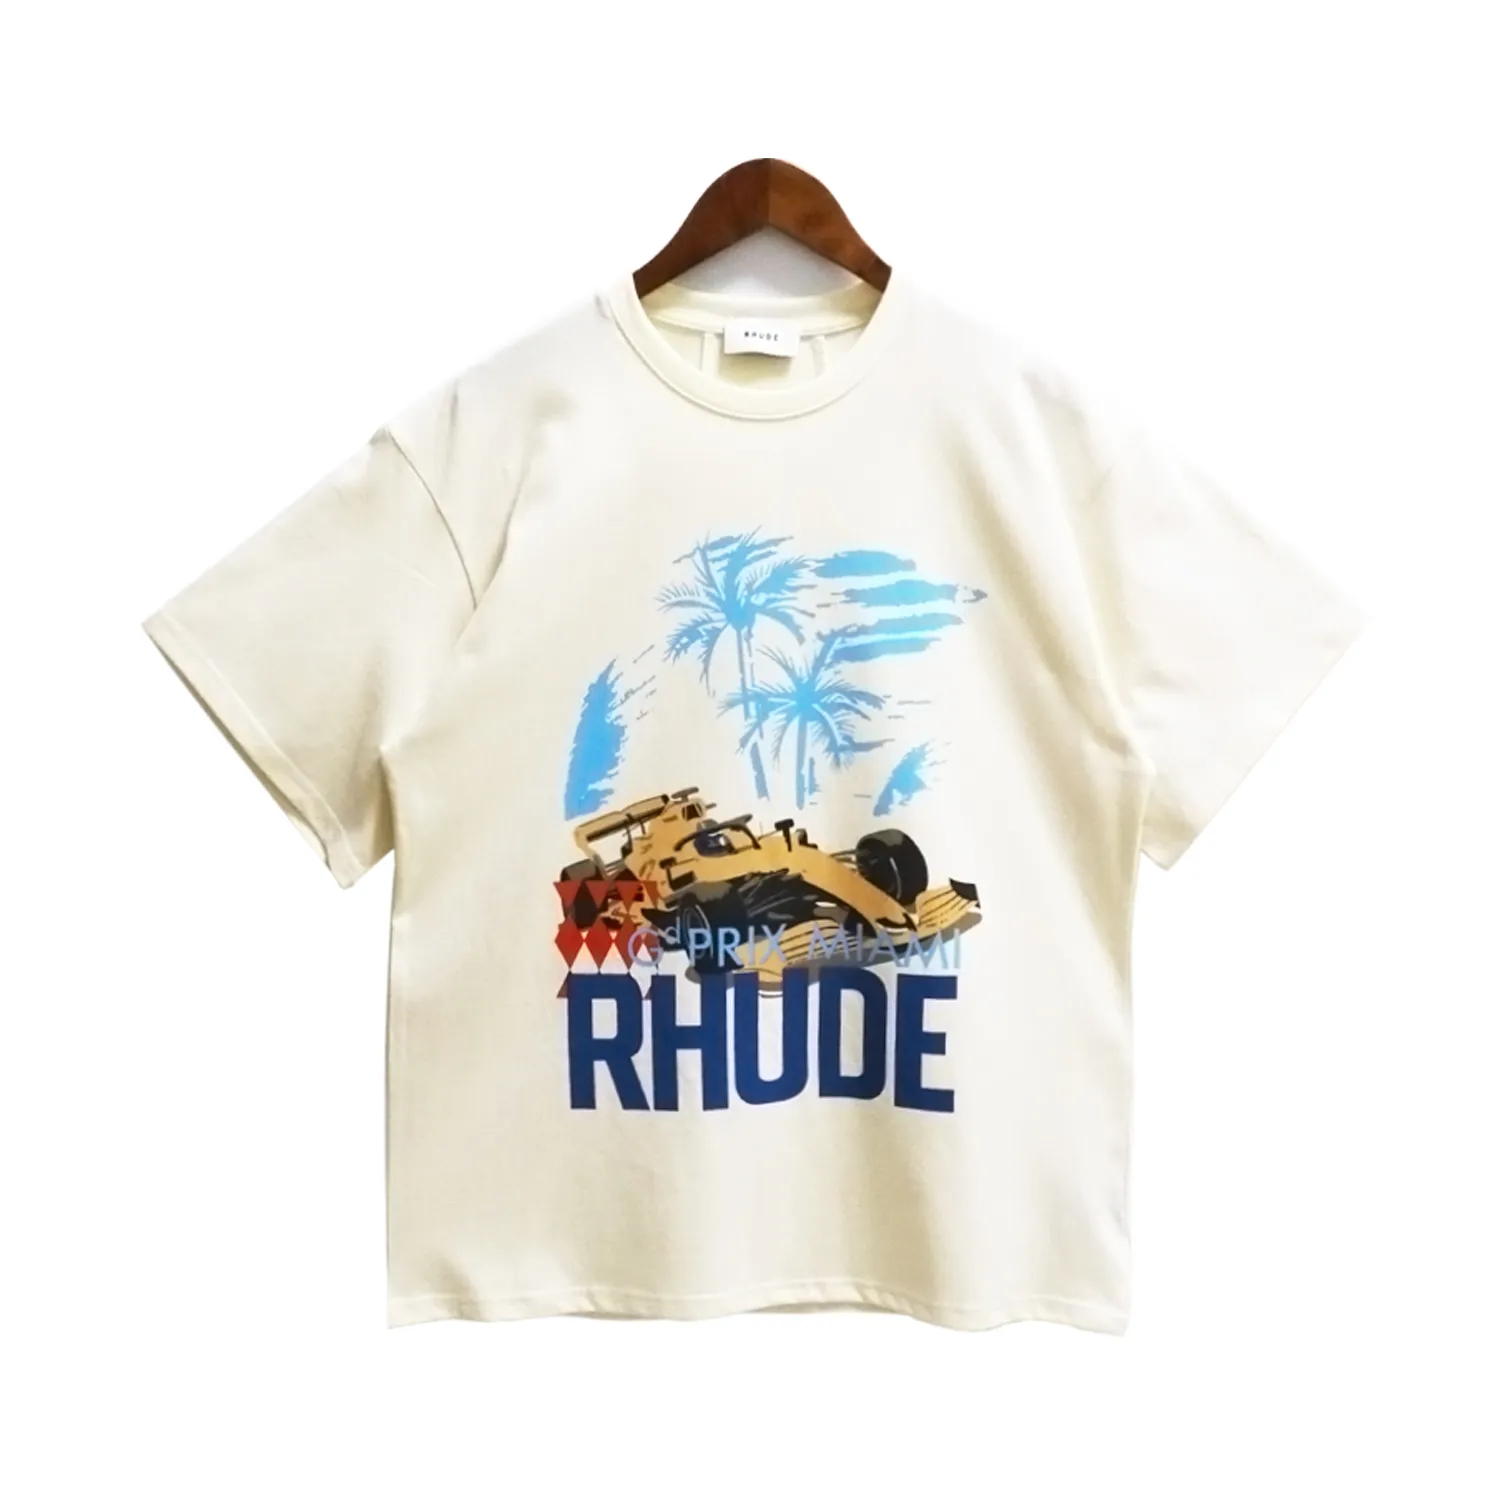 Rhude T Shirt Men designer T Shirts Rhude Shirt Wear Summer Round Neck Sweat Absorbing Short Sleeves Outdoor Breathable Cotton Tees US SIZE